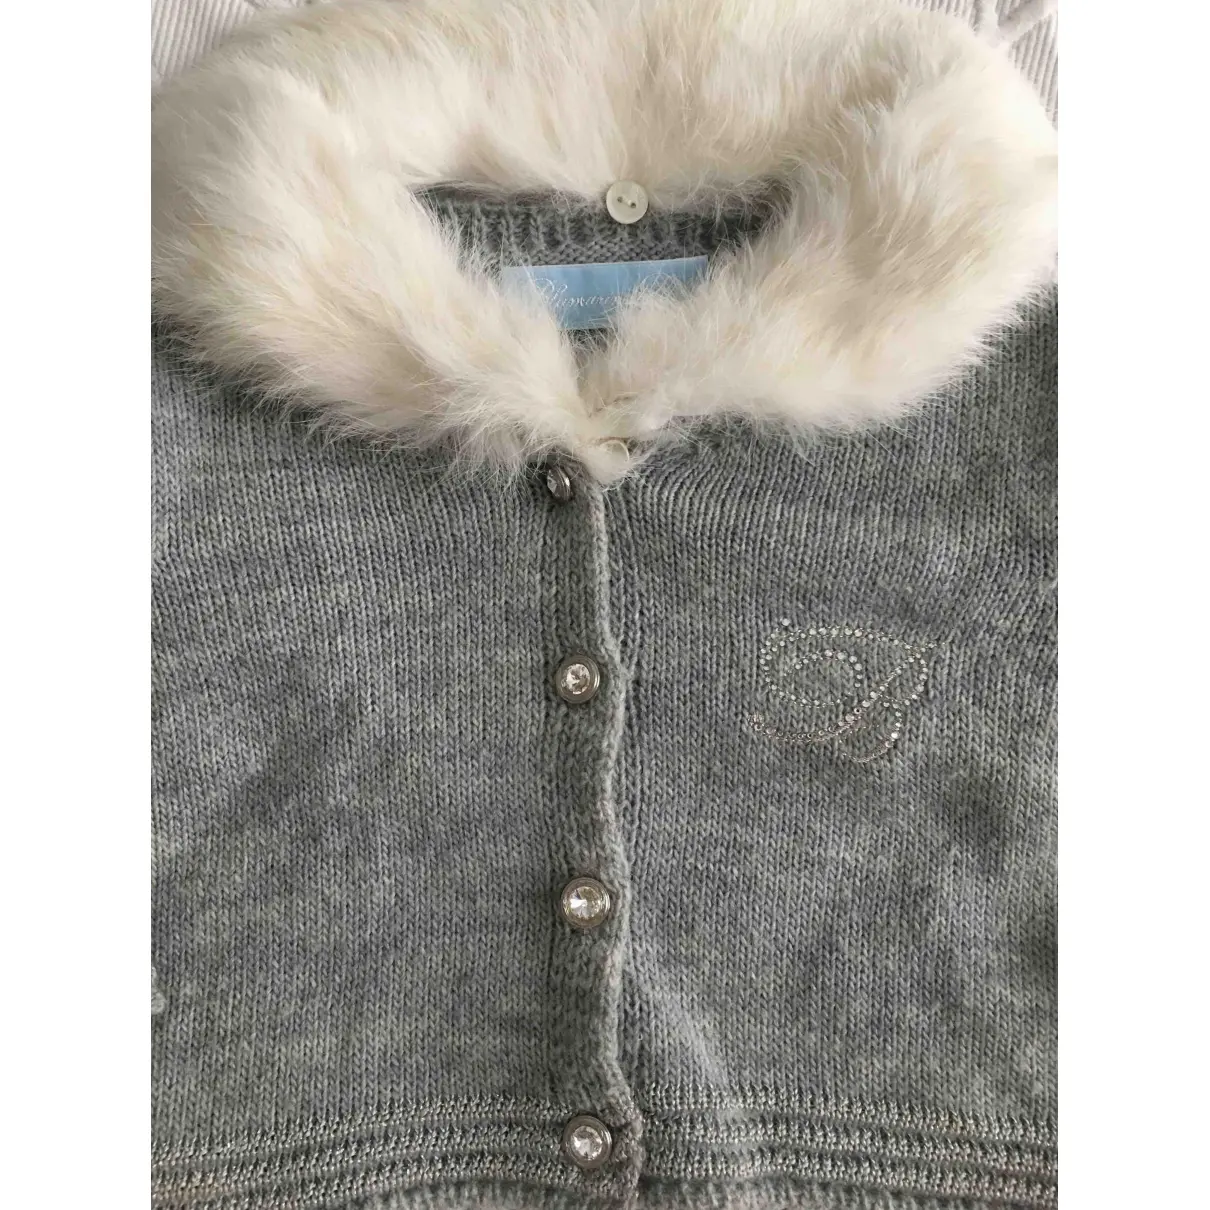 Blumarine Wool jacket for sale